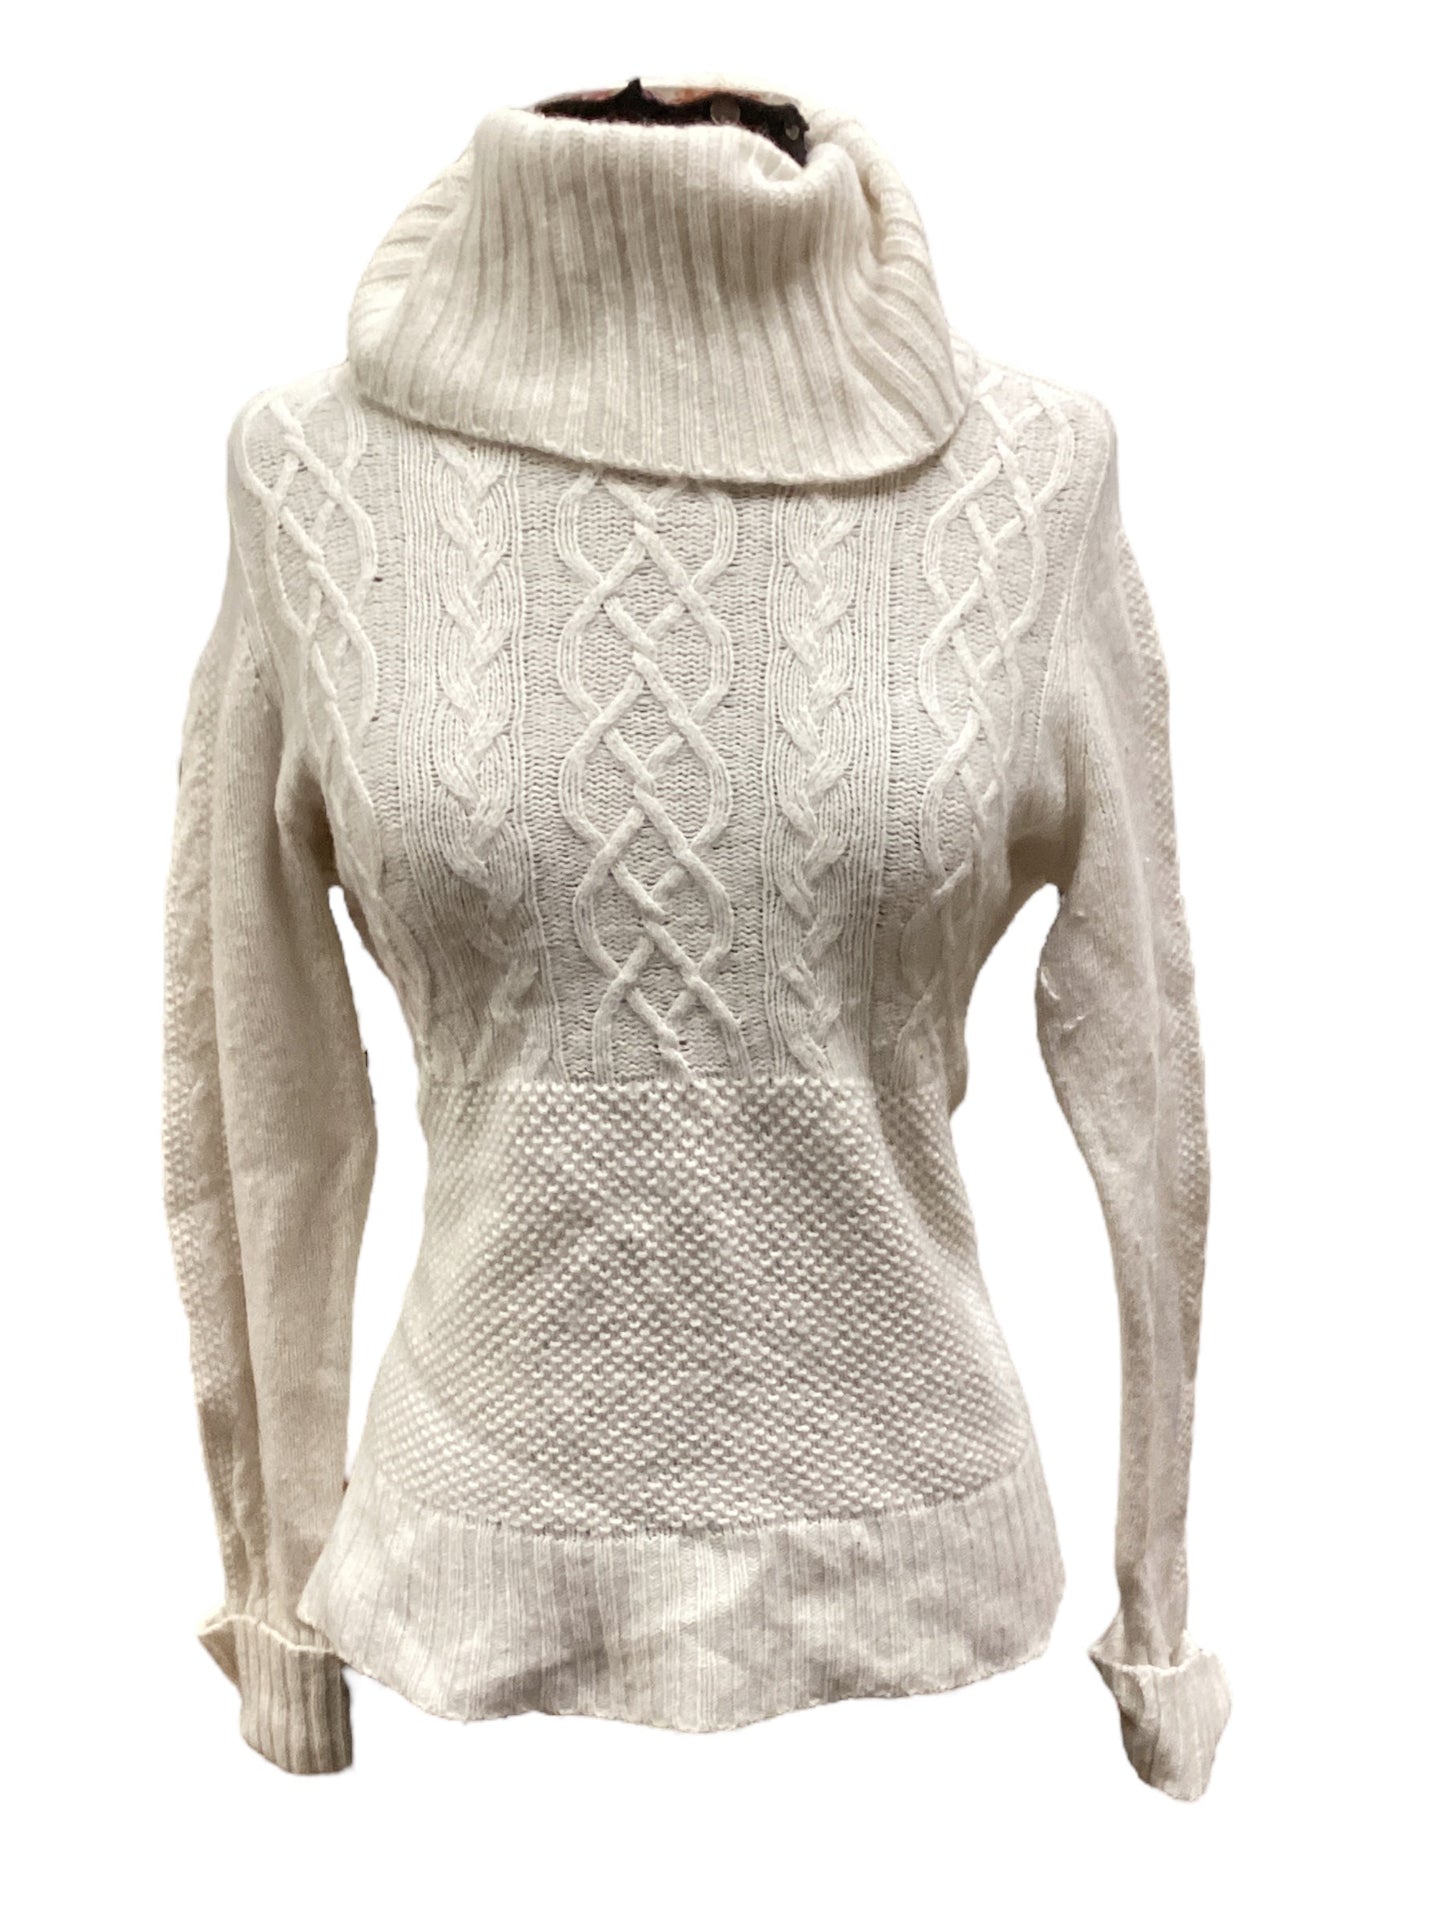 Sweater By Gap  Size: Xs